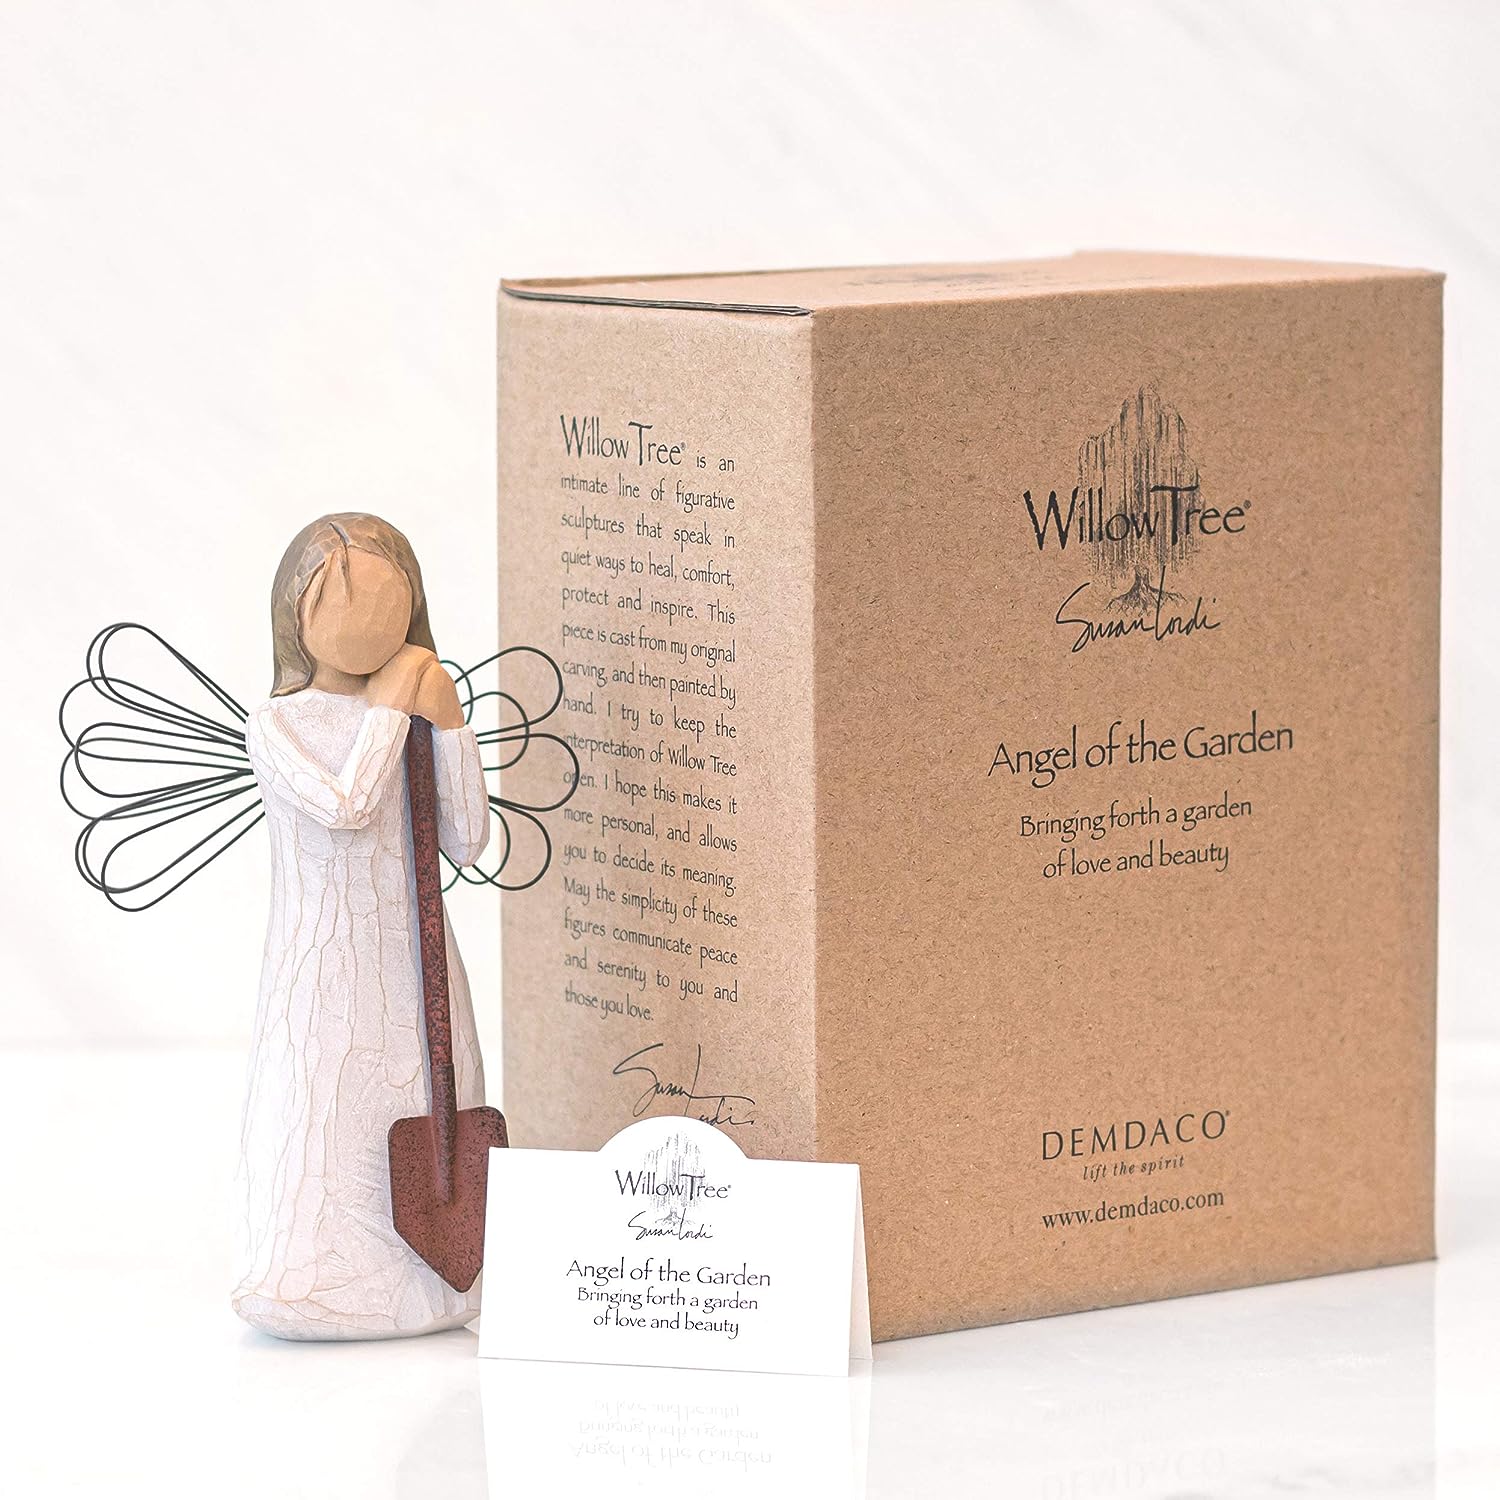 Angel-of-Garden-Willow-Tree-engel-schueppe-fluegel-box